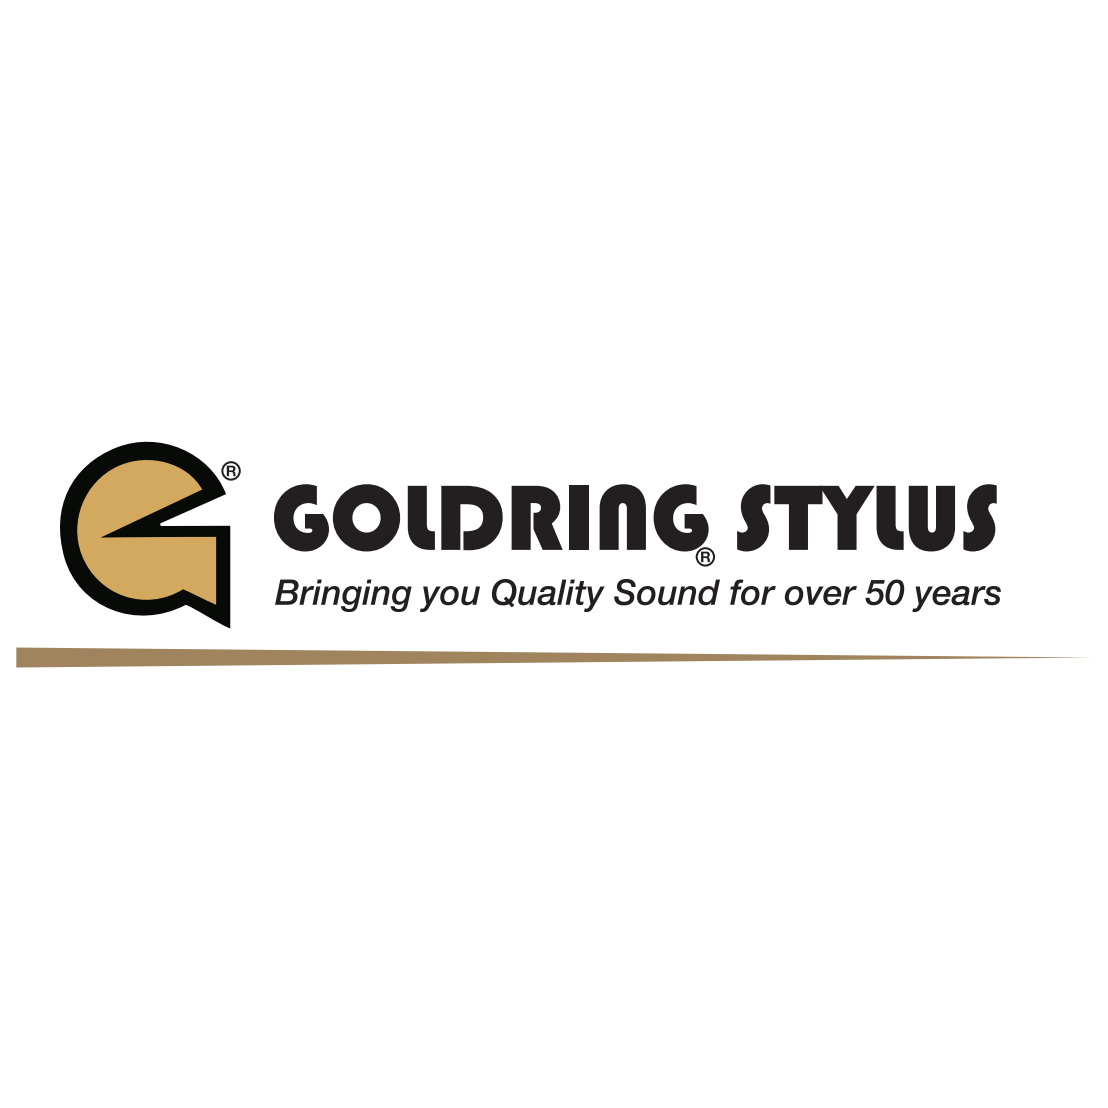 Goldring Stylus Logo